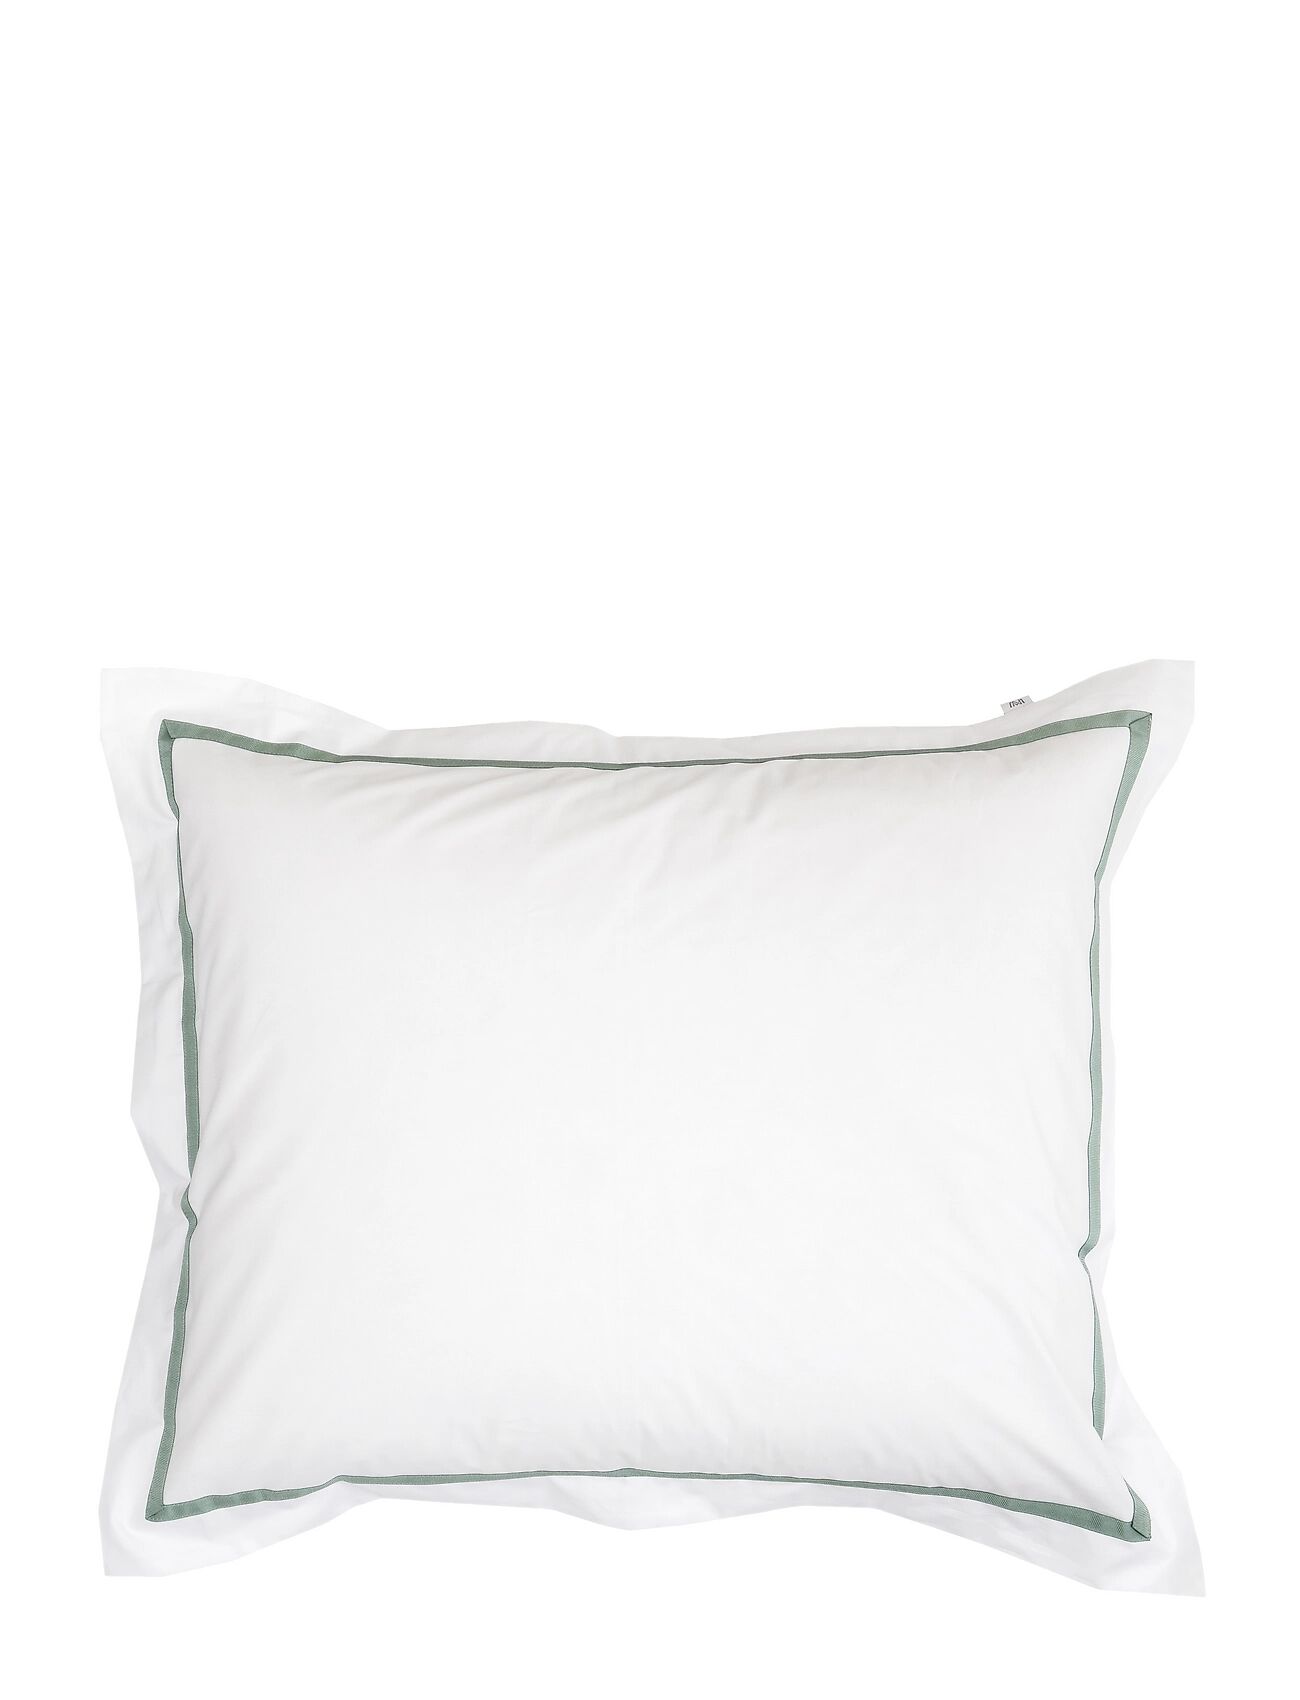 Mille Notti Singolo Pillow Case Organic Home Textiles Bedtextiles Pillow Cases Hvit Mille Notti